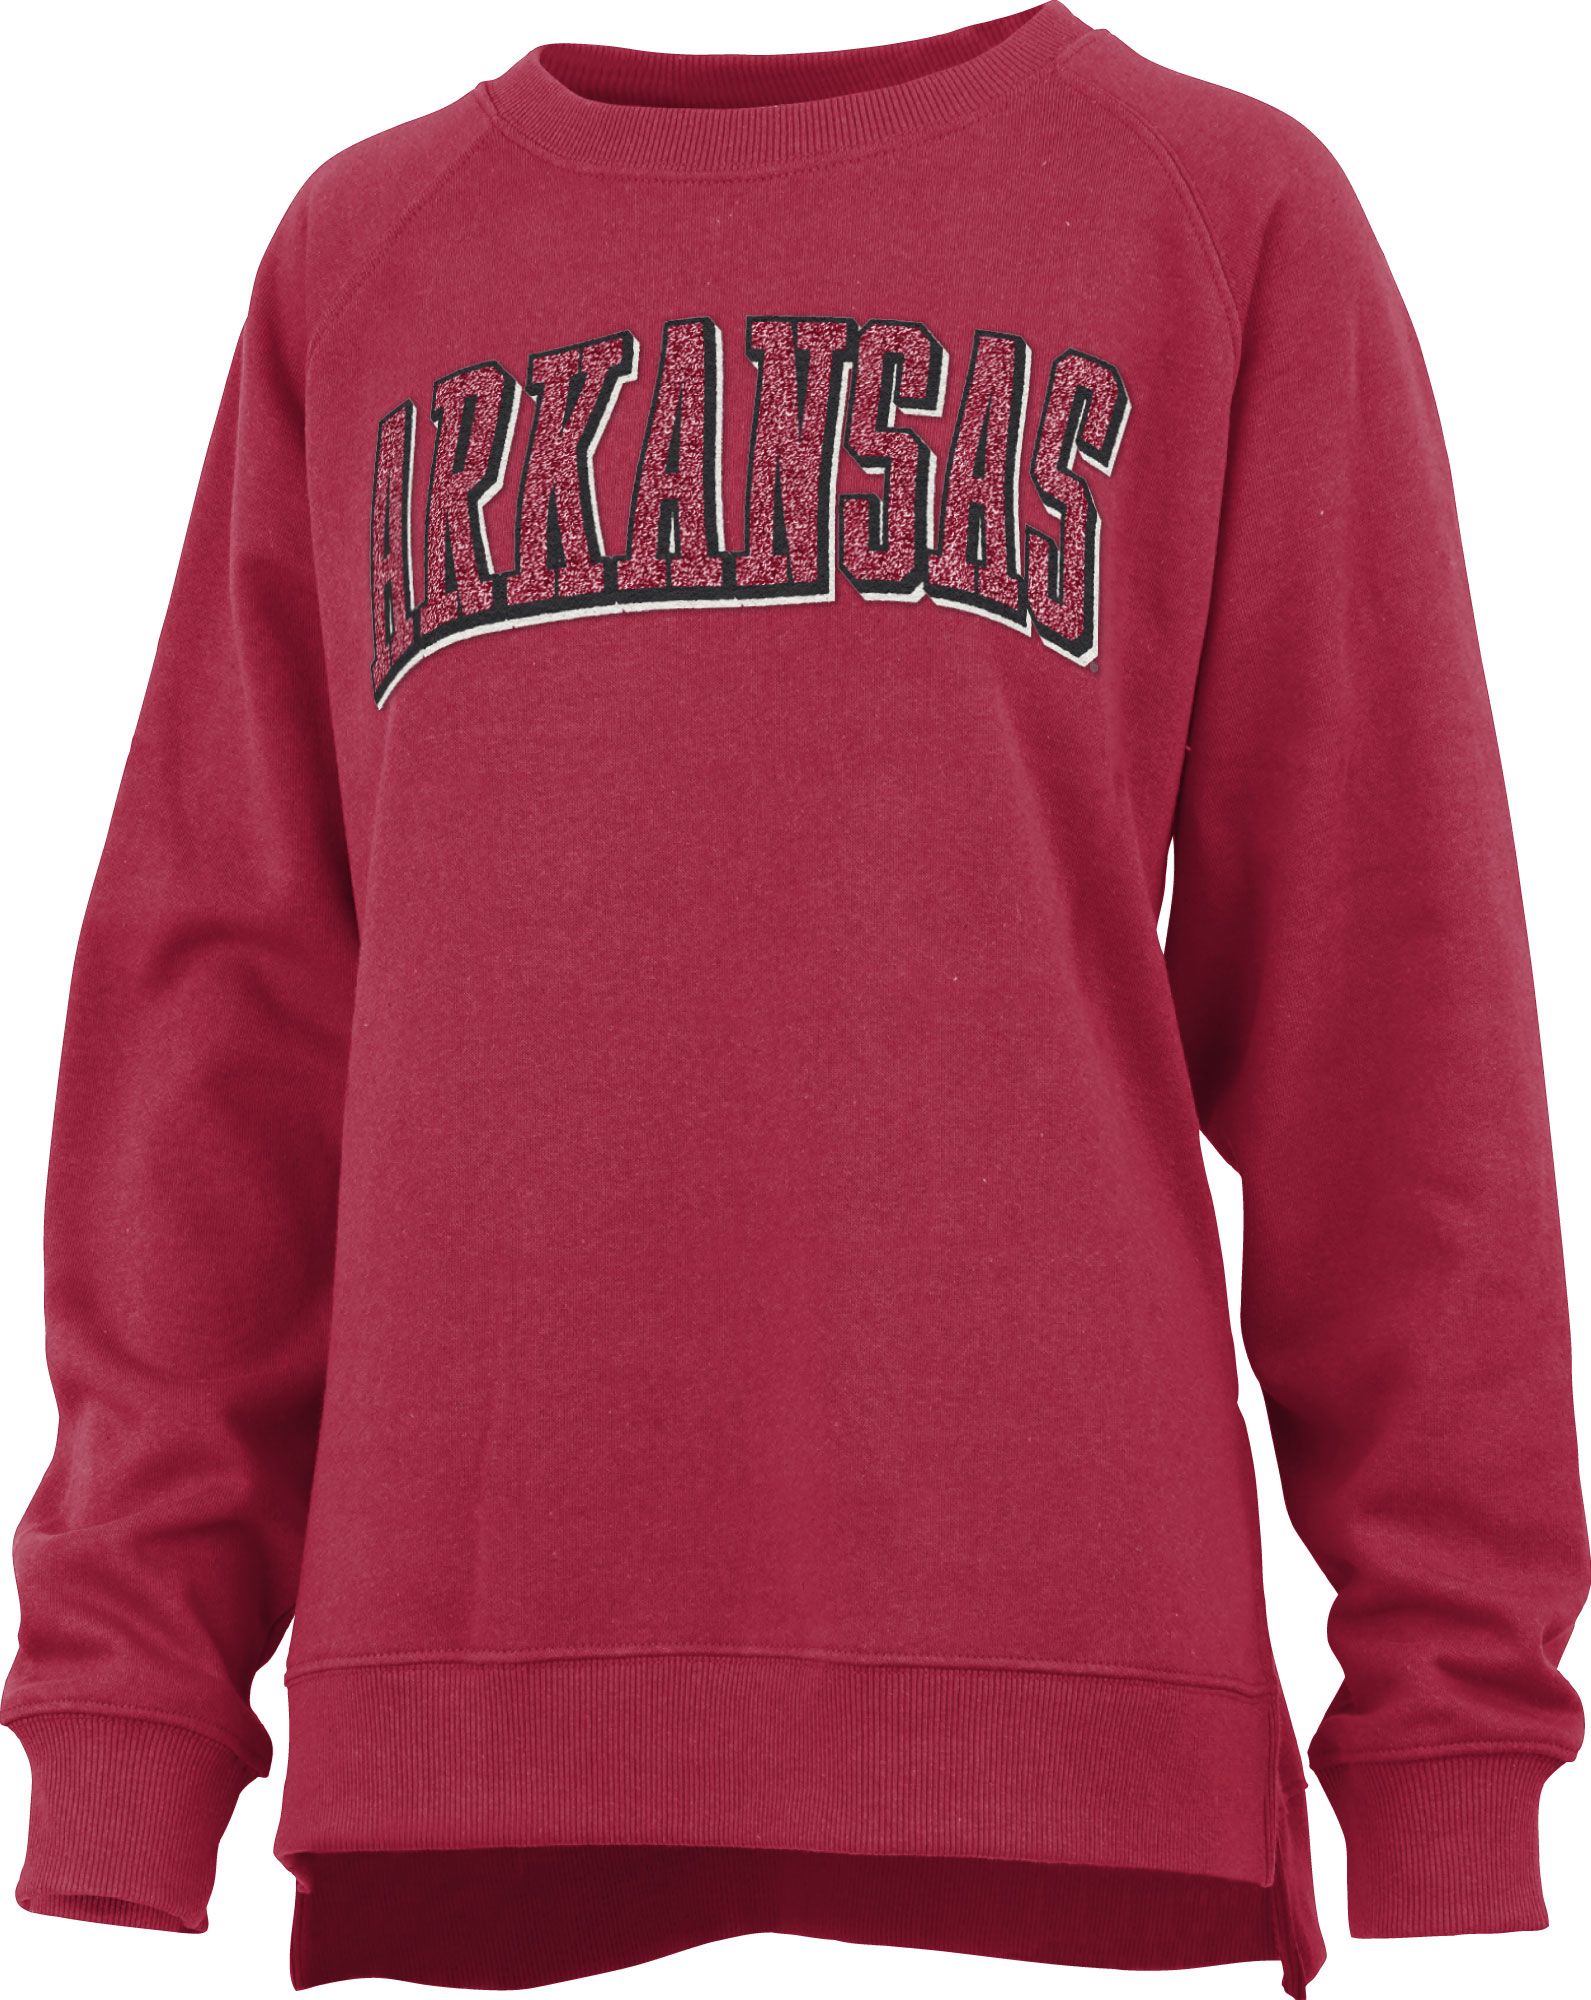 Arkansas Razorbacks ladies' jersey collection